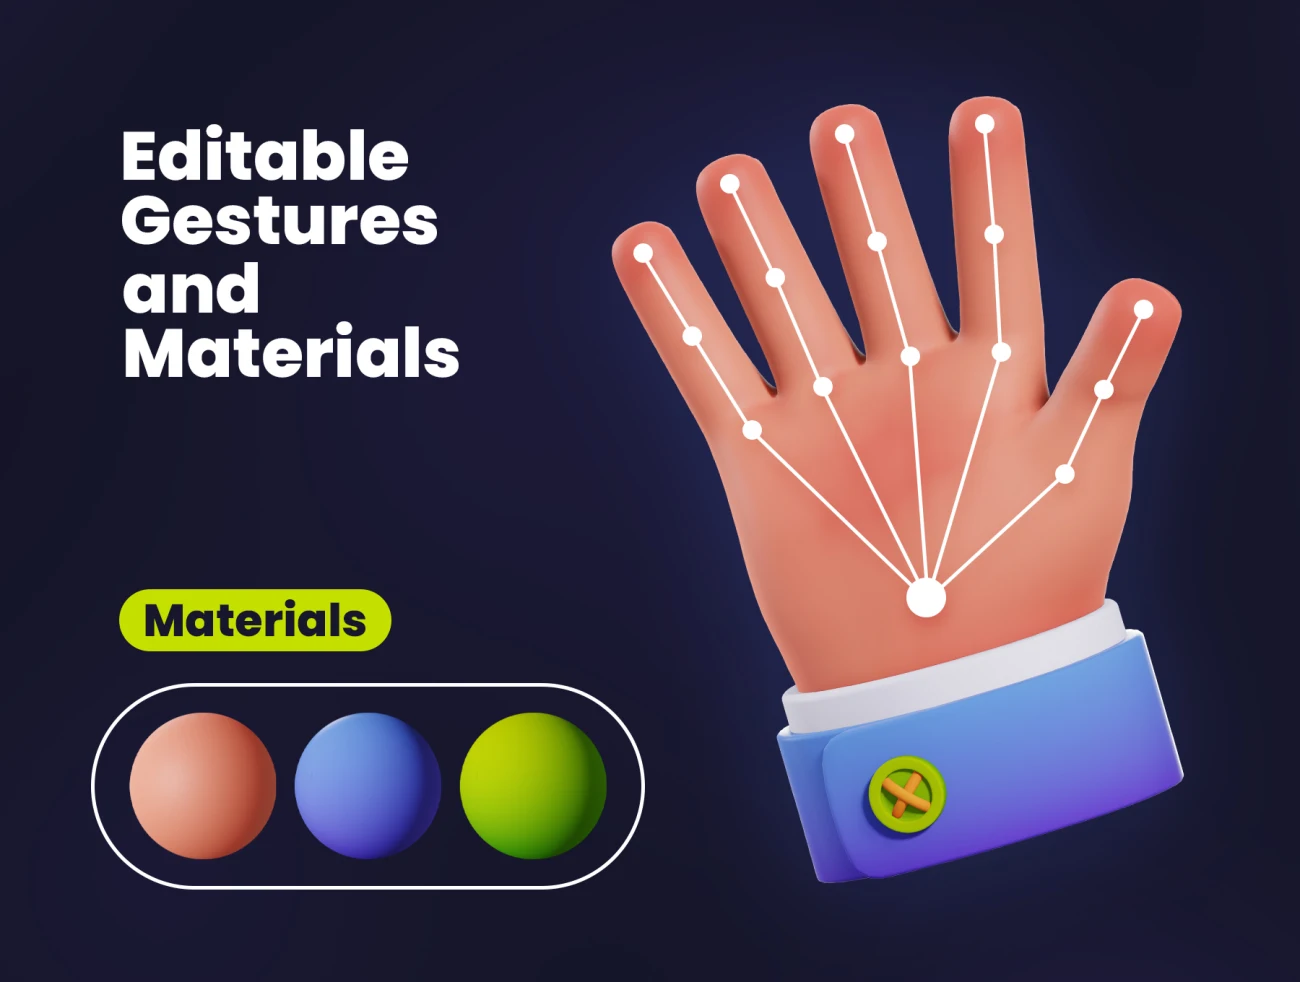 40款不同手势3D模型设计素材 Hand Gestures 3D Illustration .blender .psd .xd .figma插图5